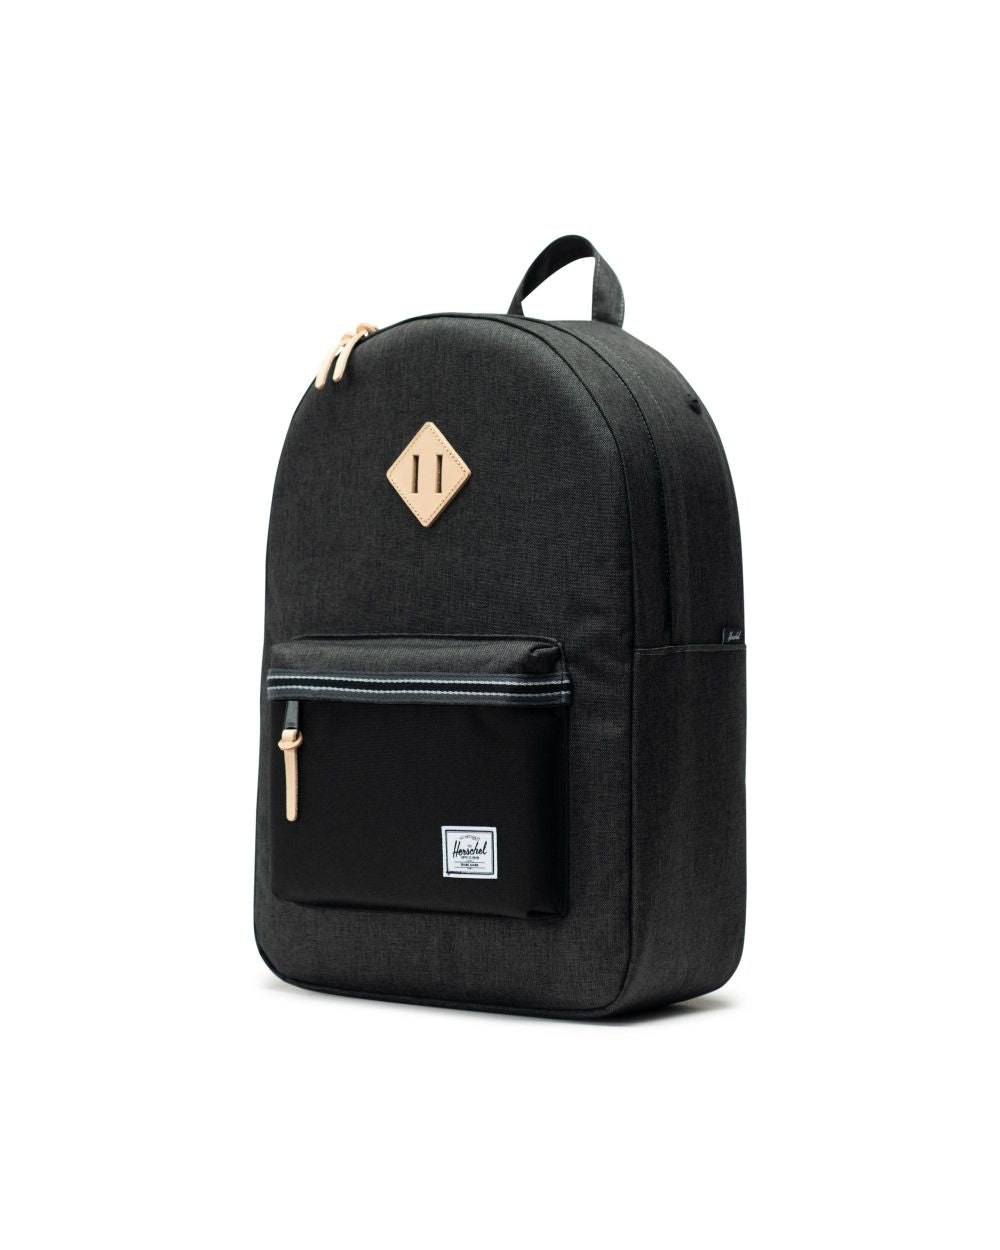 Herschel Supply Co. - Heritage Backpack, Black/Black Crosshatch